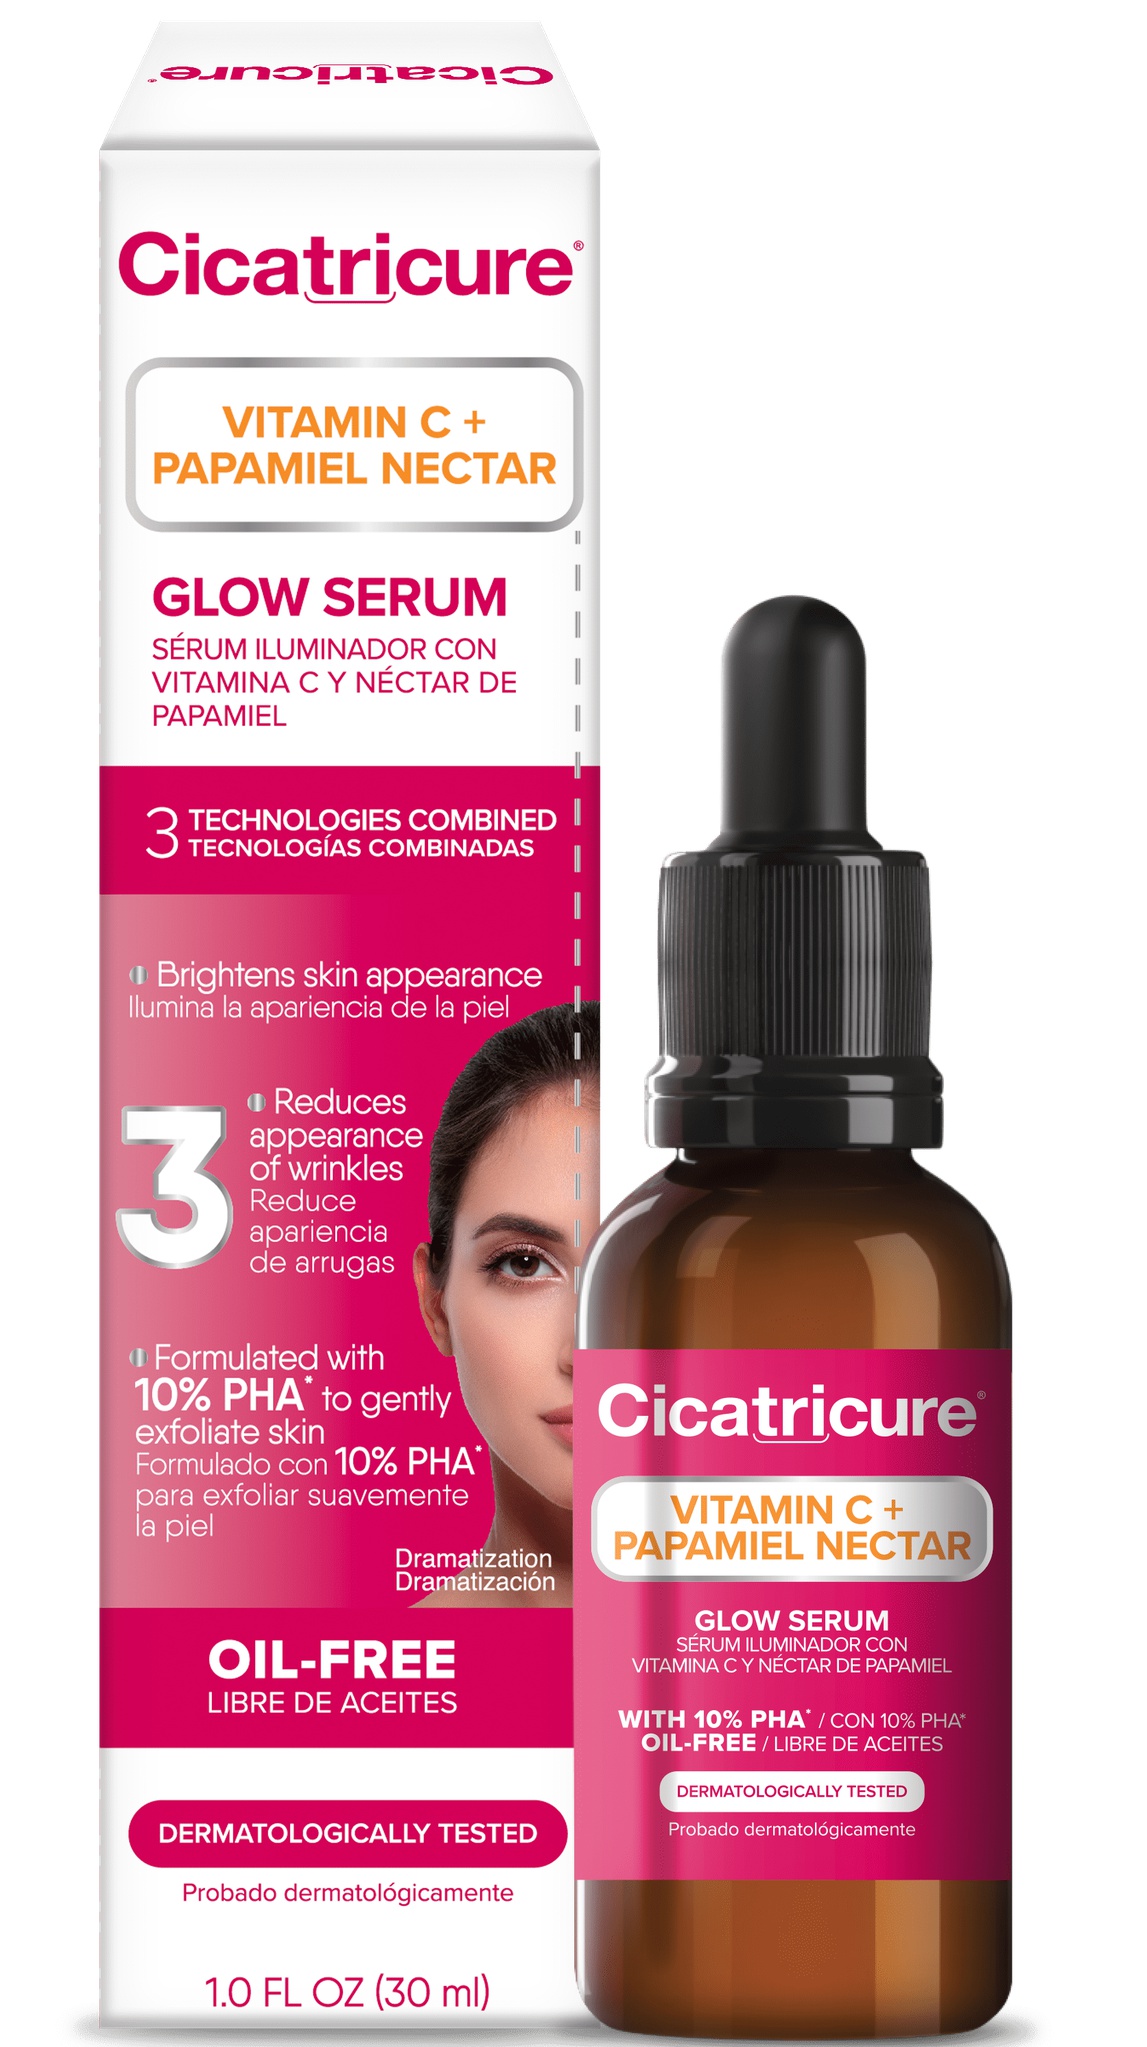 Cicatricure Vitamin C + Papamiel Nectar Glow Serum